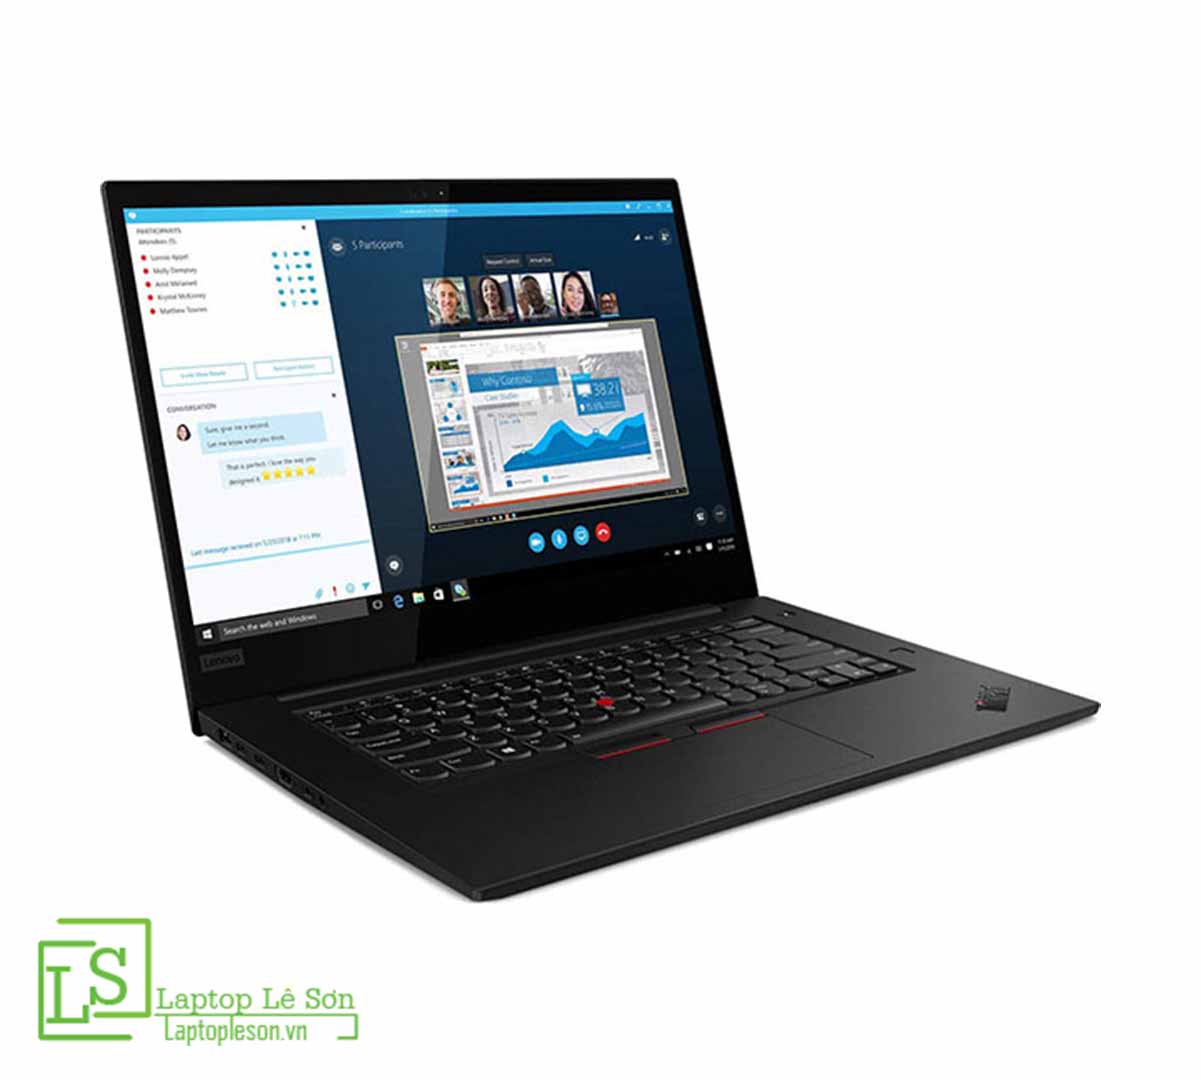 Lenovo ThinkPad T490 - Laptop Lê Sơn 01